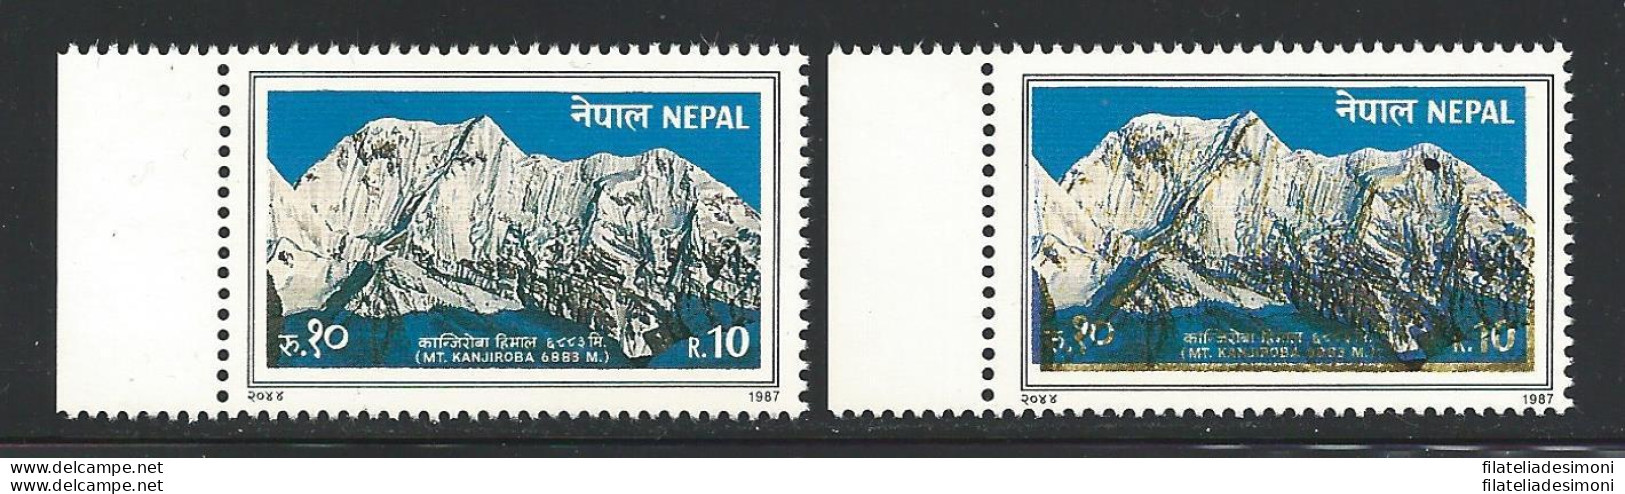 1987 NEPAL, SG N° 495 Turismo  MNH/**  VARIETA  STAMPA SPOSTATA - Nepal